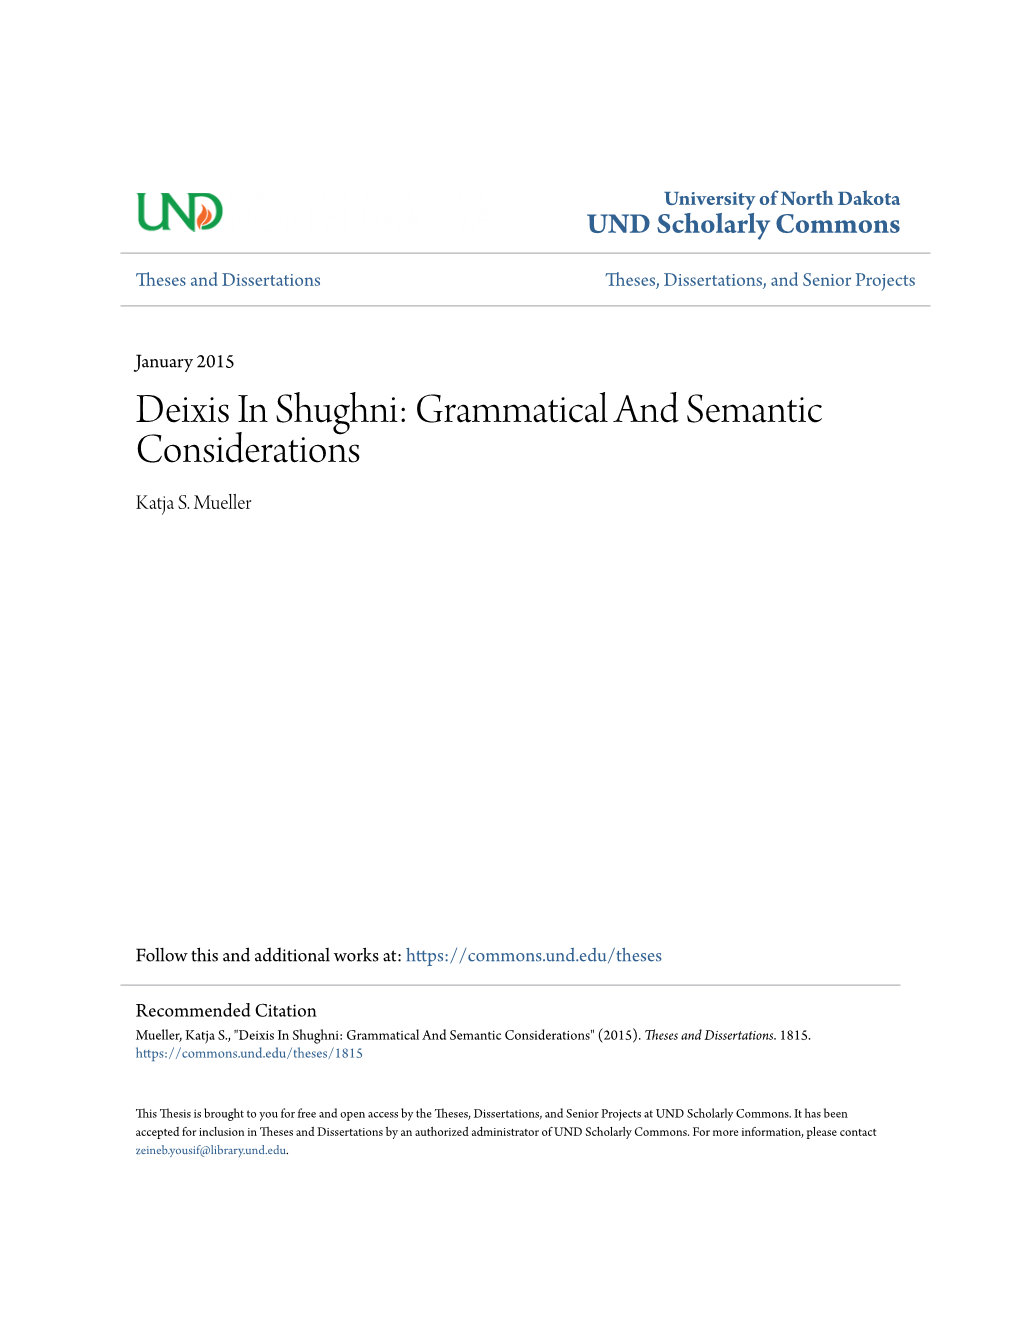 Deixis in Shughni: Grammatical and Semantic Considerations Katja S